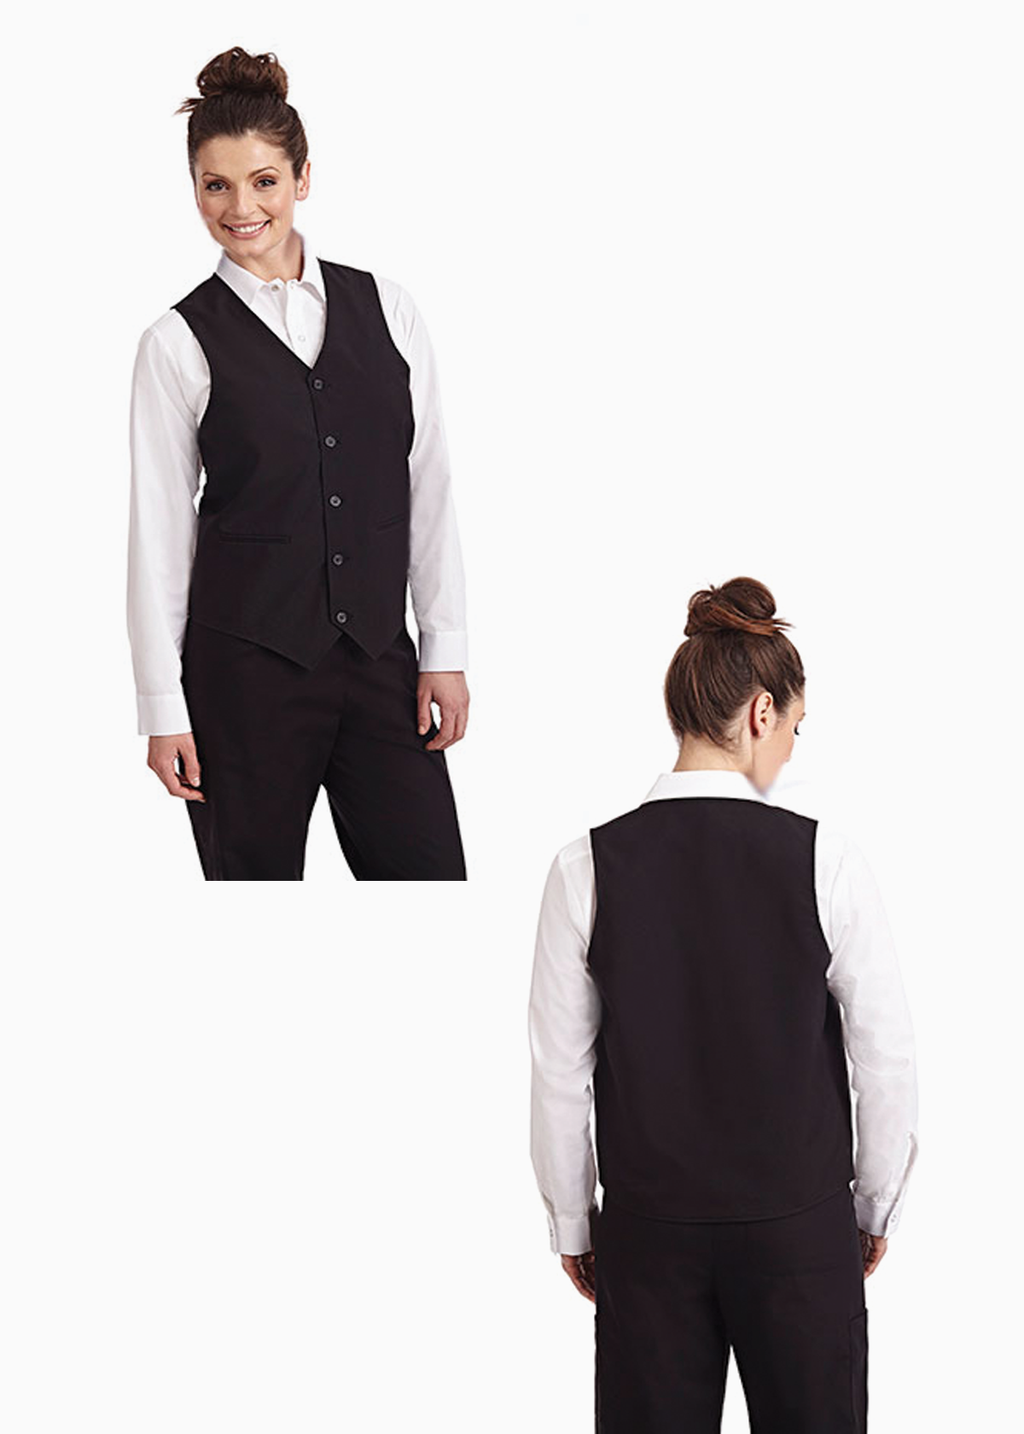 Product - MOBBWaiter/Waitress Front of House Vest